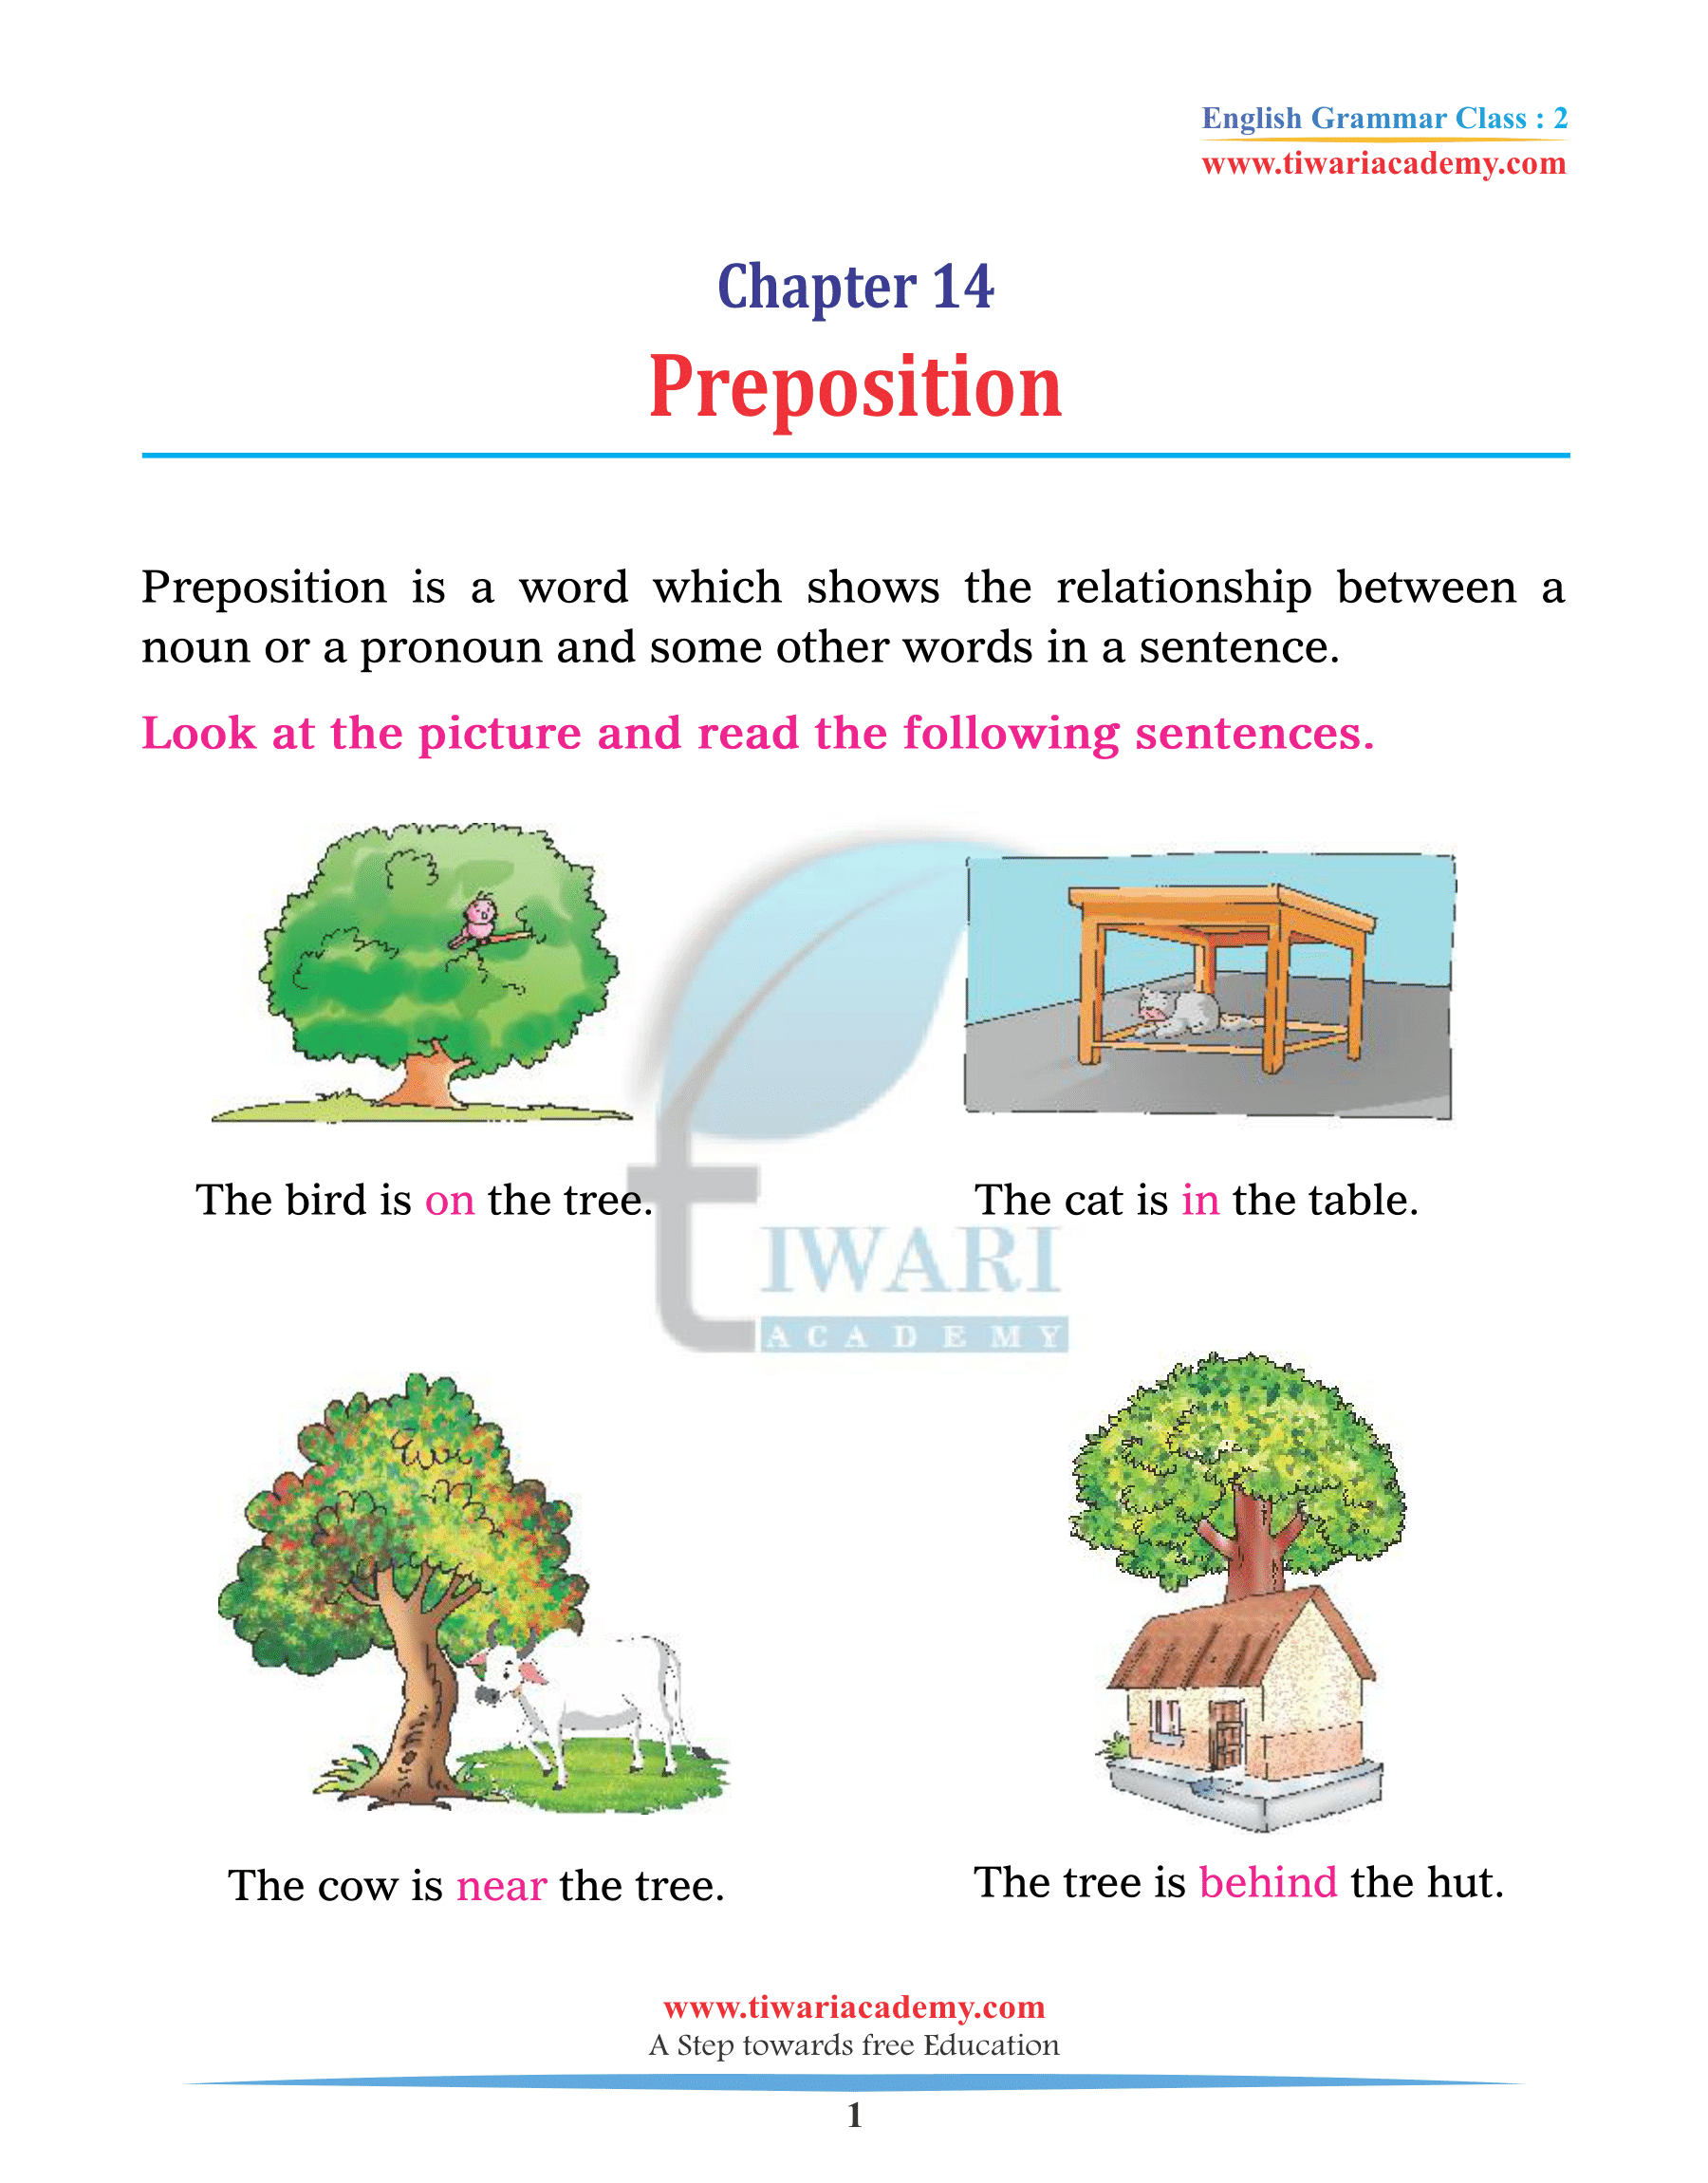 Class 2 English Grammar Chapter 14 Preposition uses